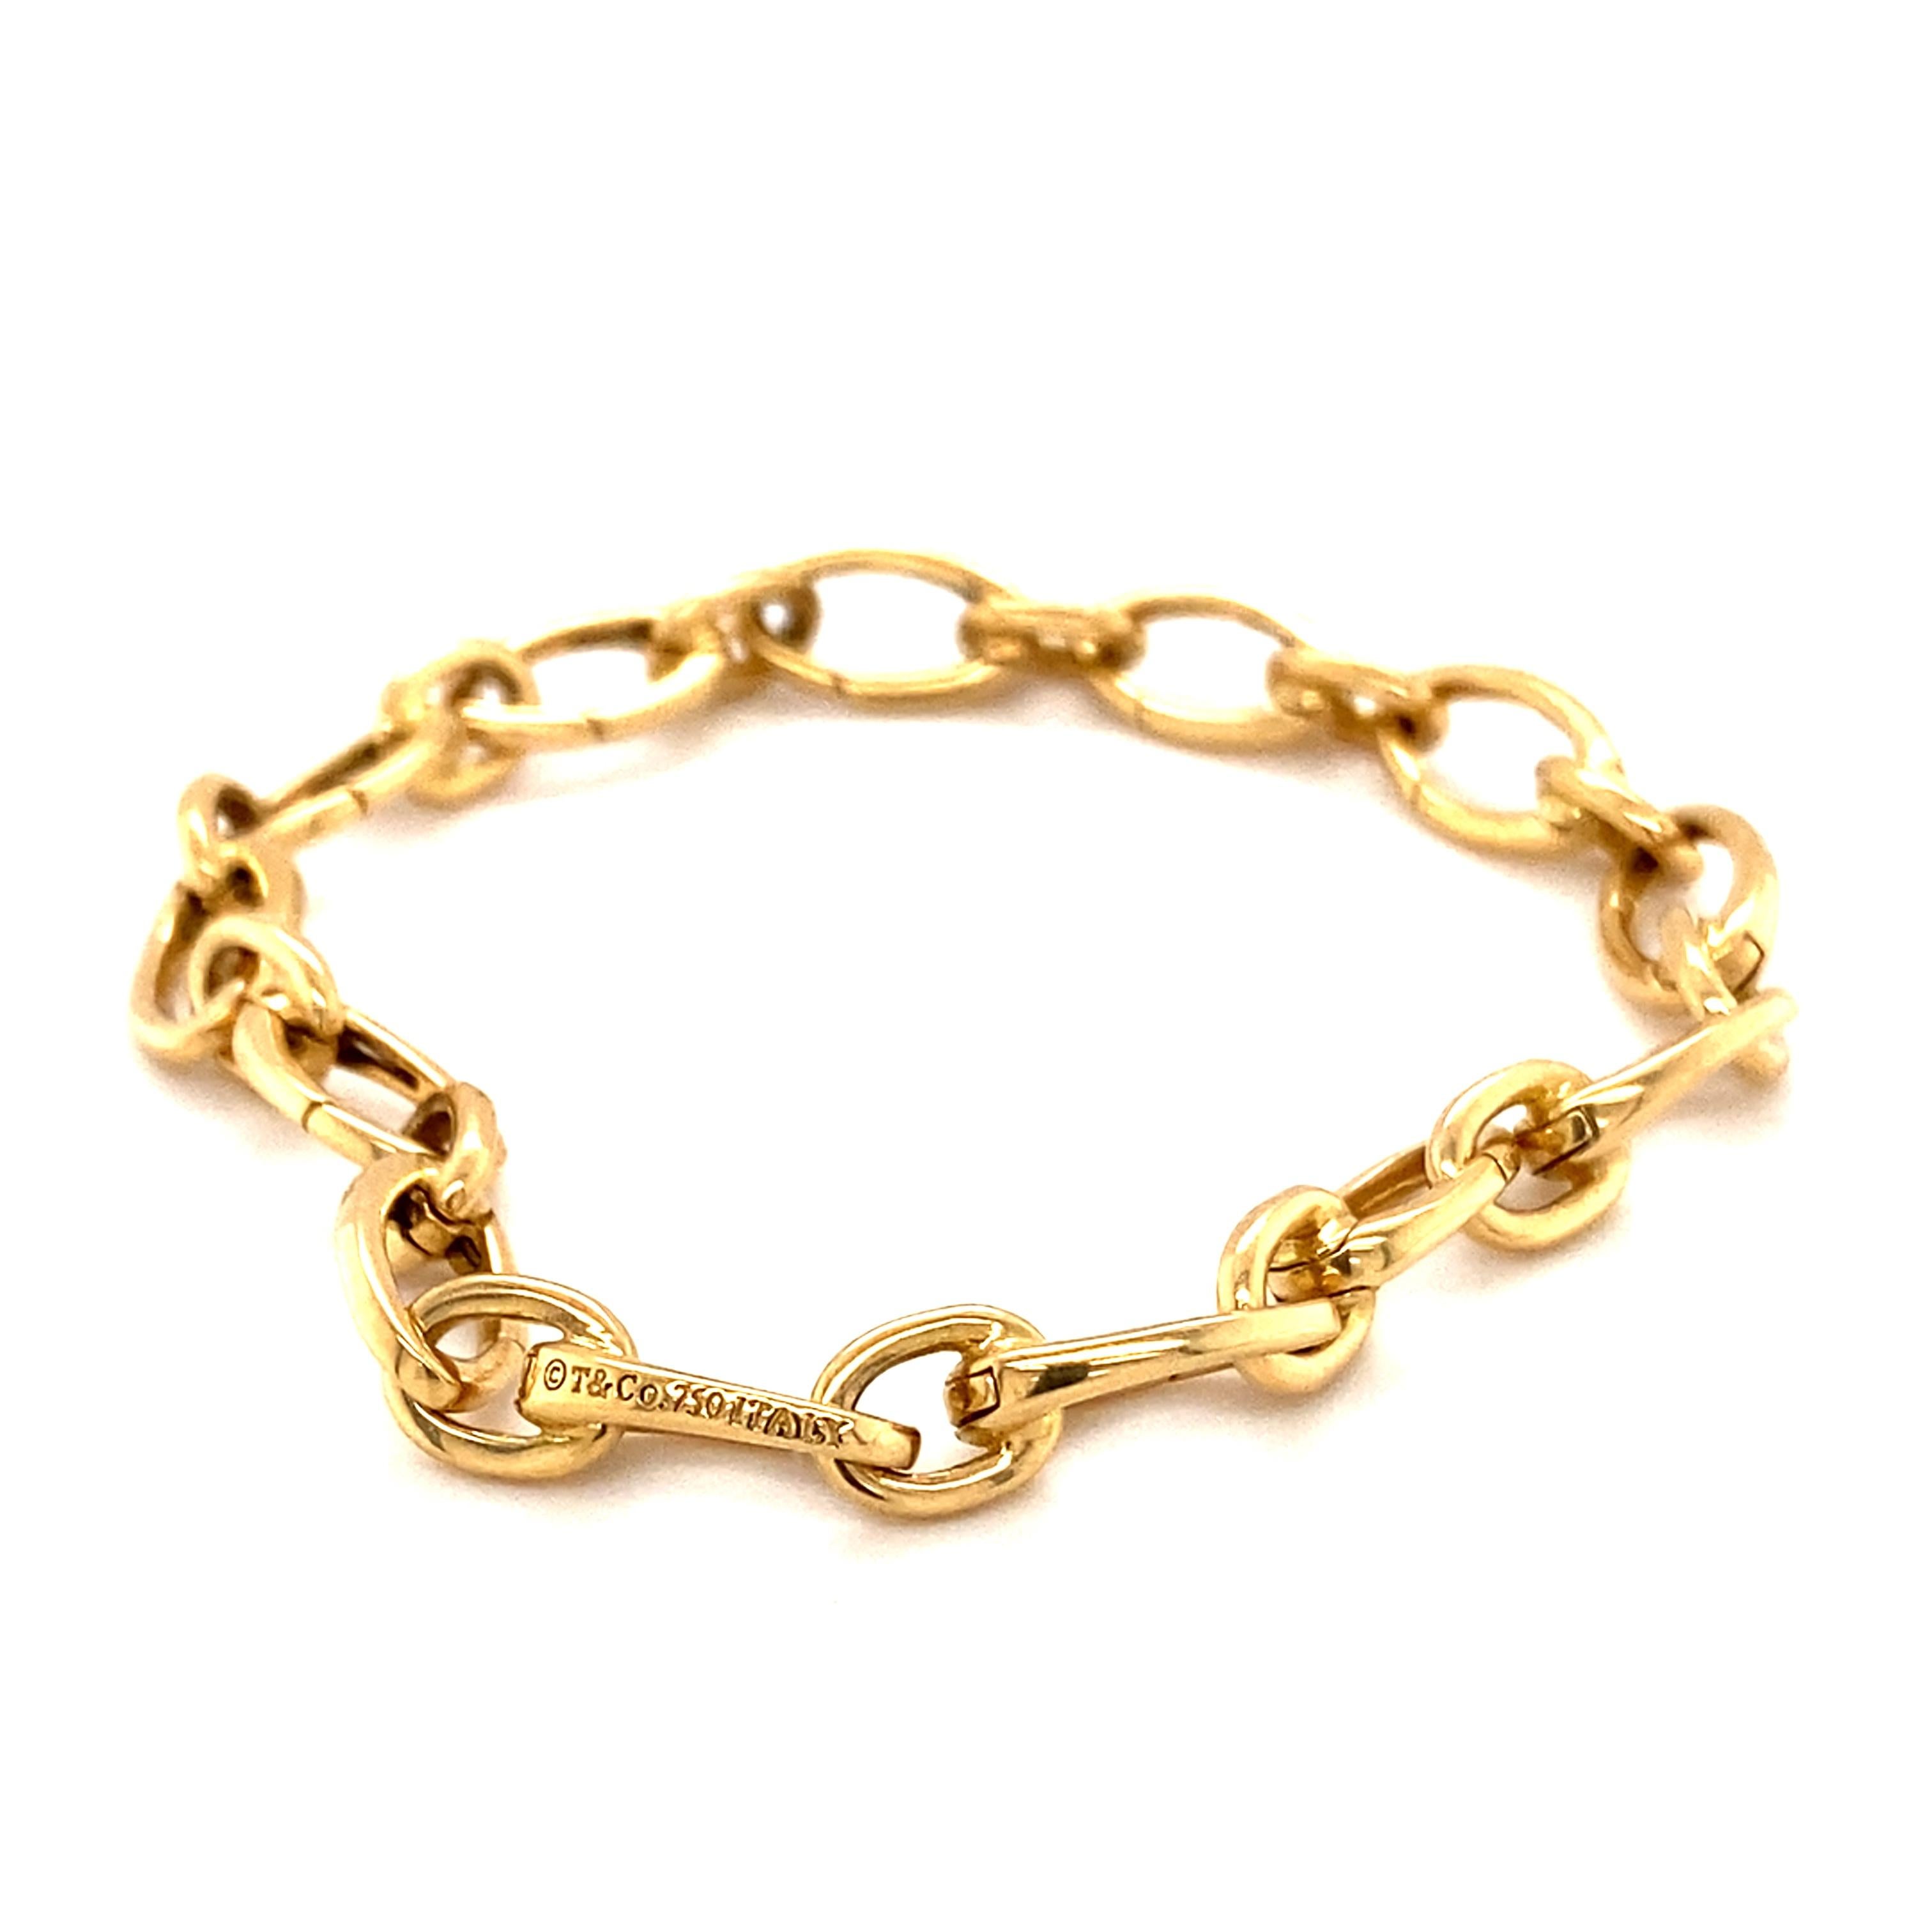 Contemporary 1990s Tiffany & Co. Oval Link Bracelet, 18 Karat Yellow Gold